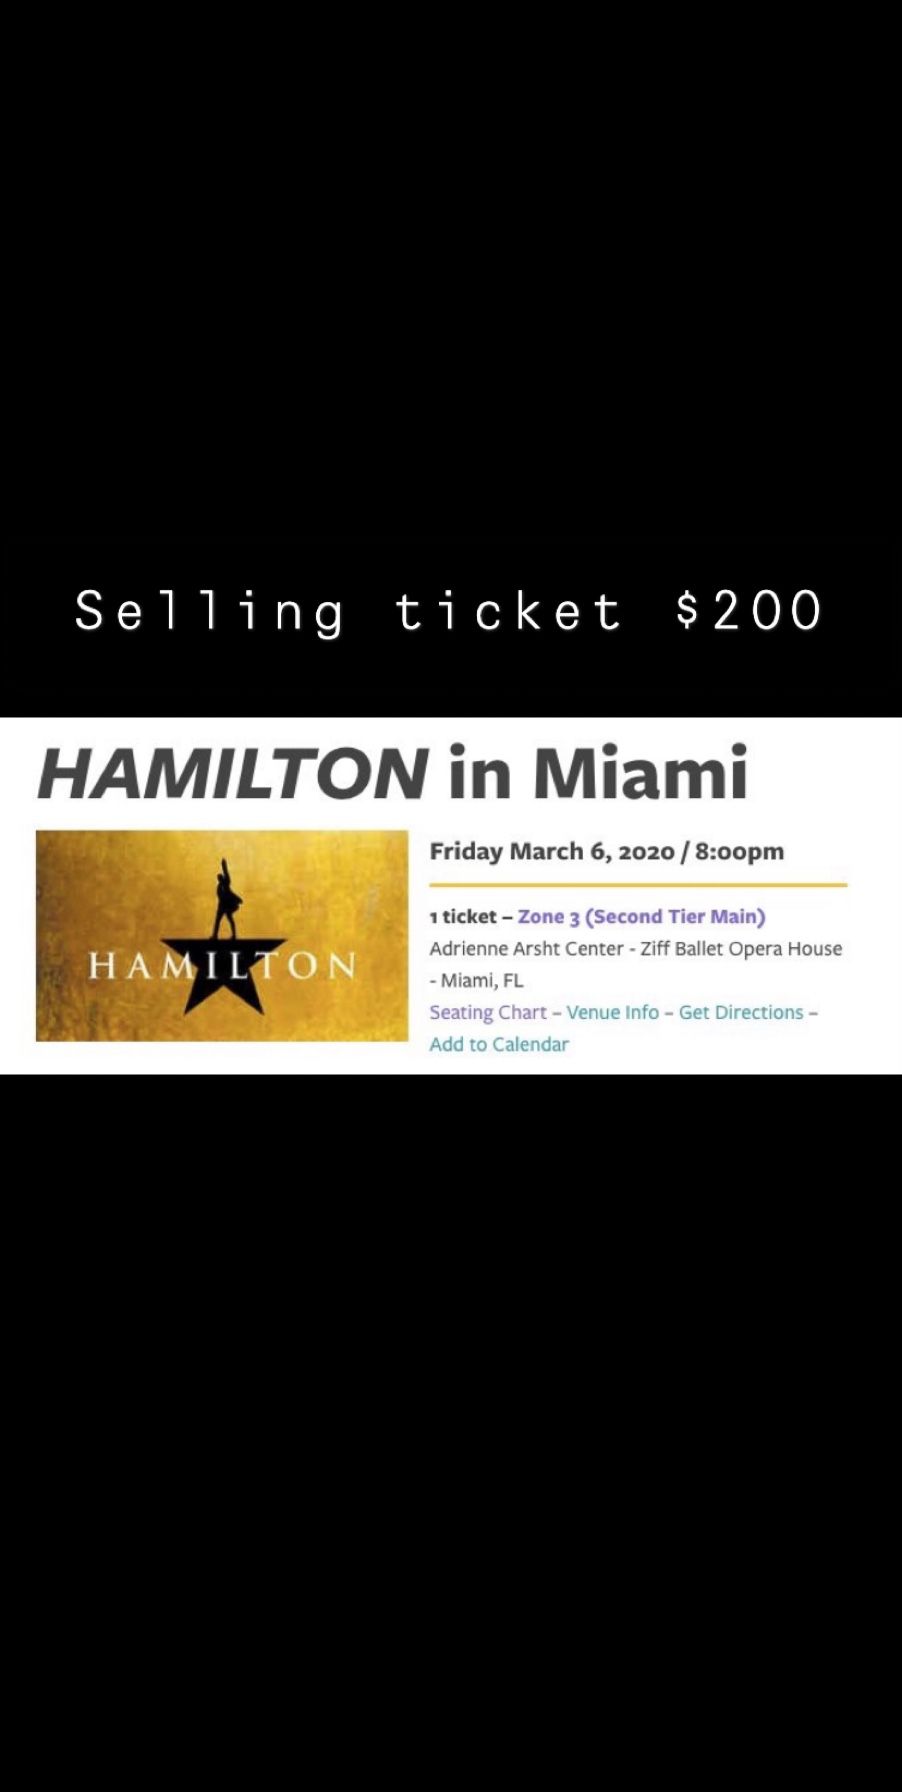 Hamilton the musical ticket